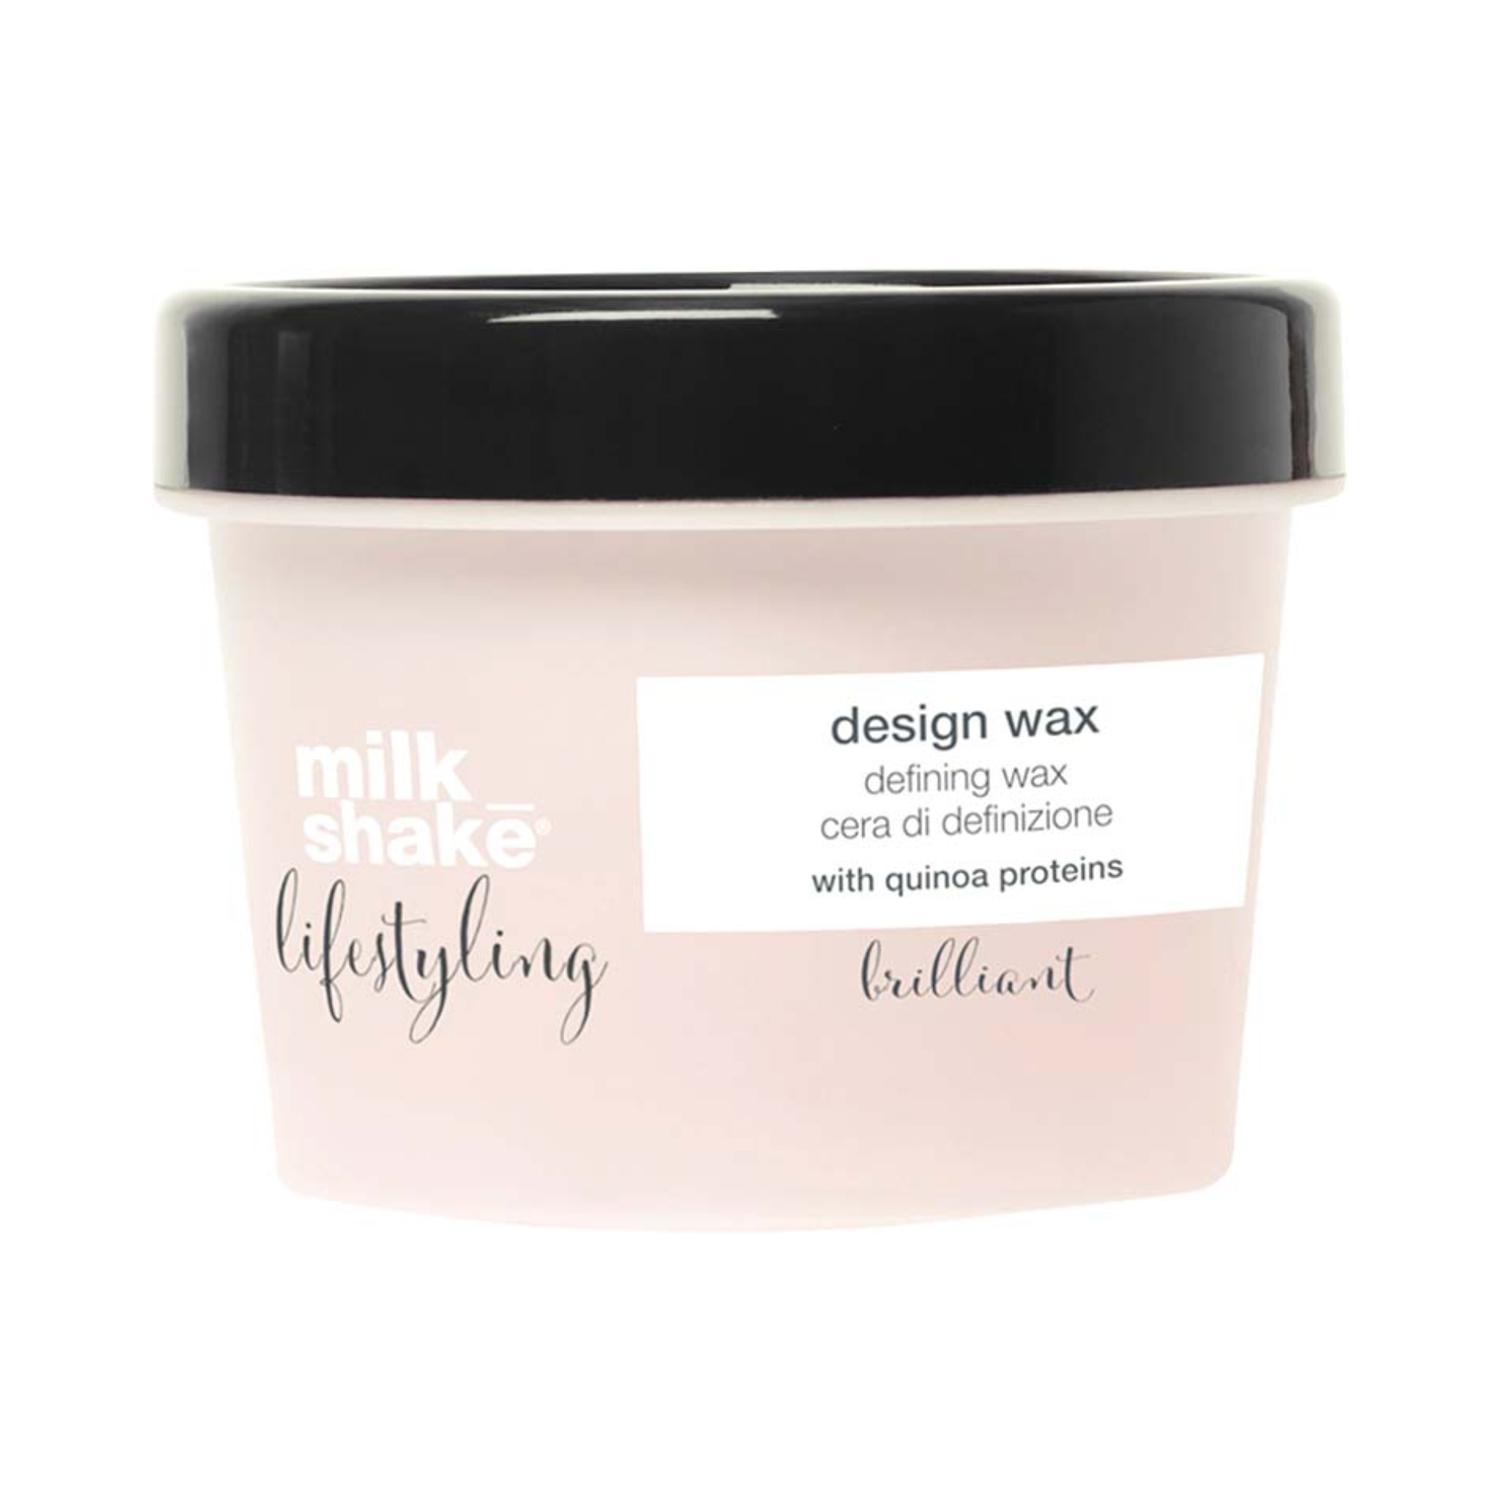 milk shake lifestyling design wax (100ml)